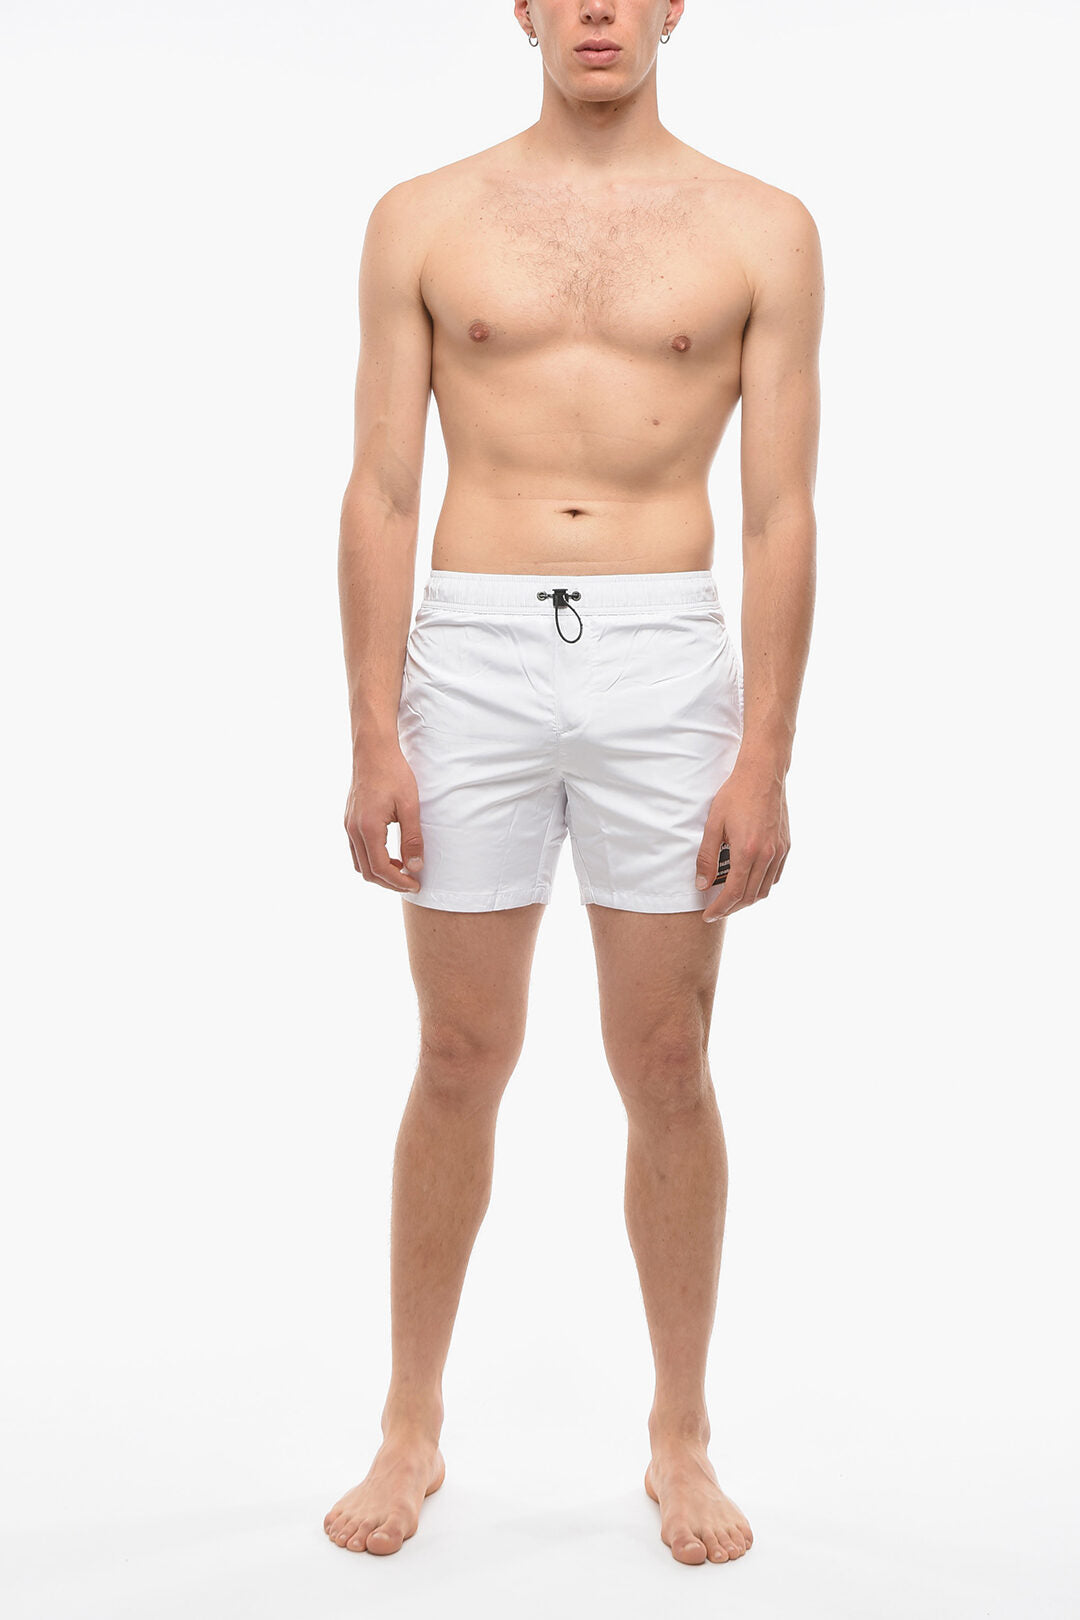 Rue st-guillaume basic plain boxer swimsuit with 3 pockets white